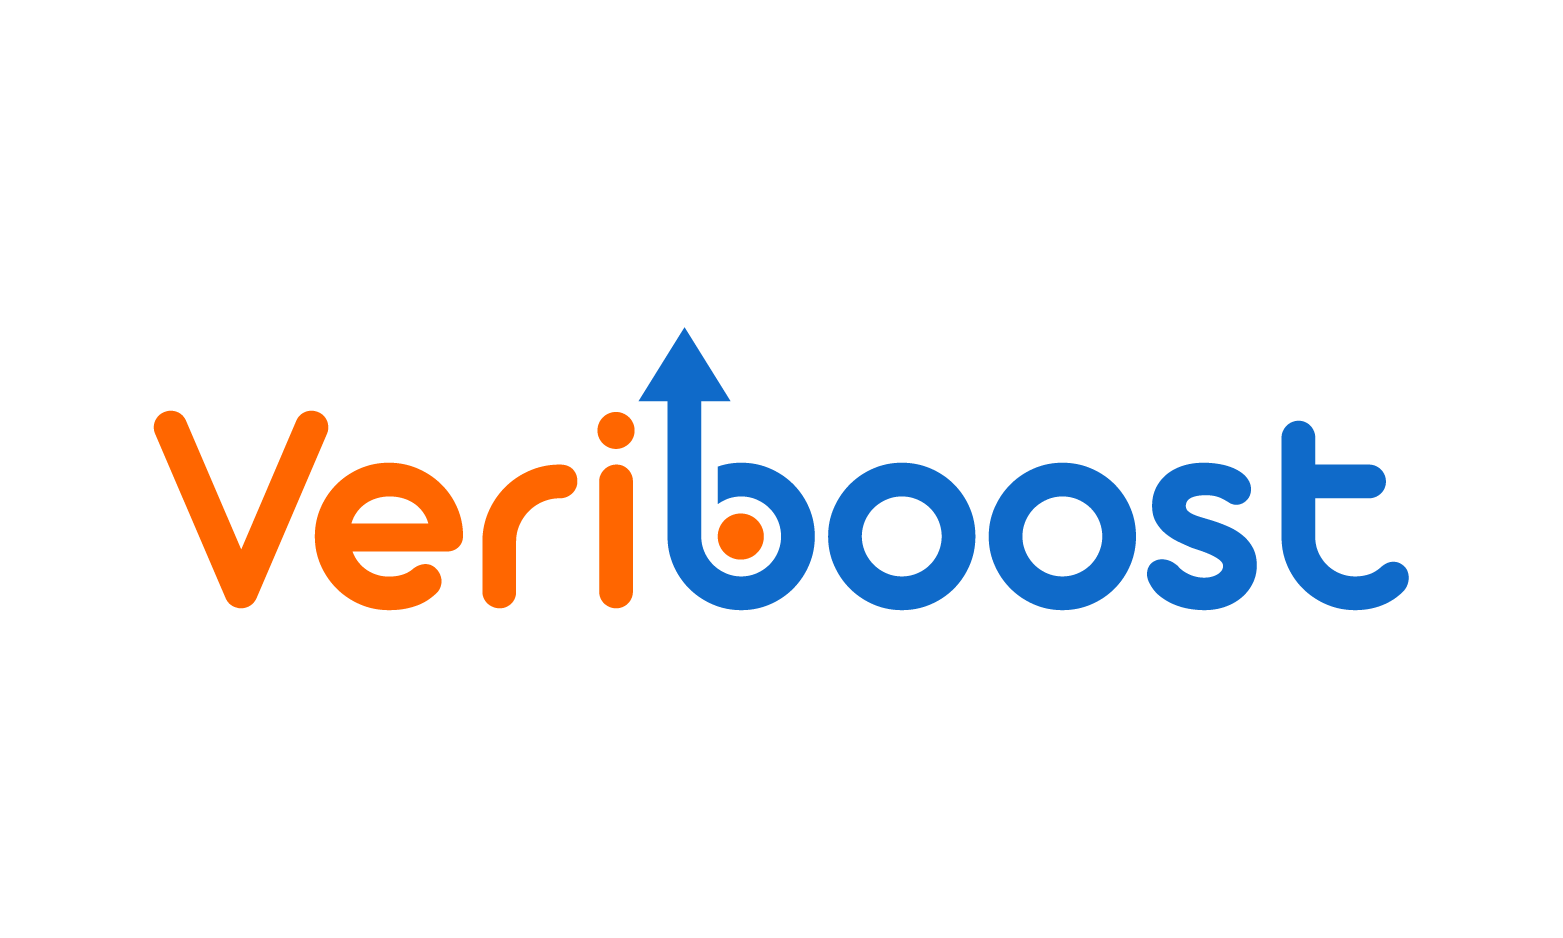 VeriBoost.com - Creative brandable domain for sale